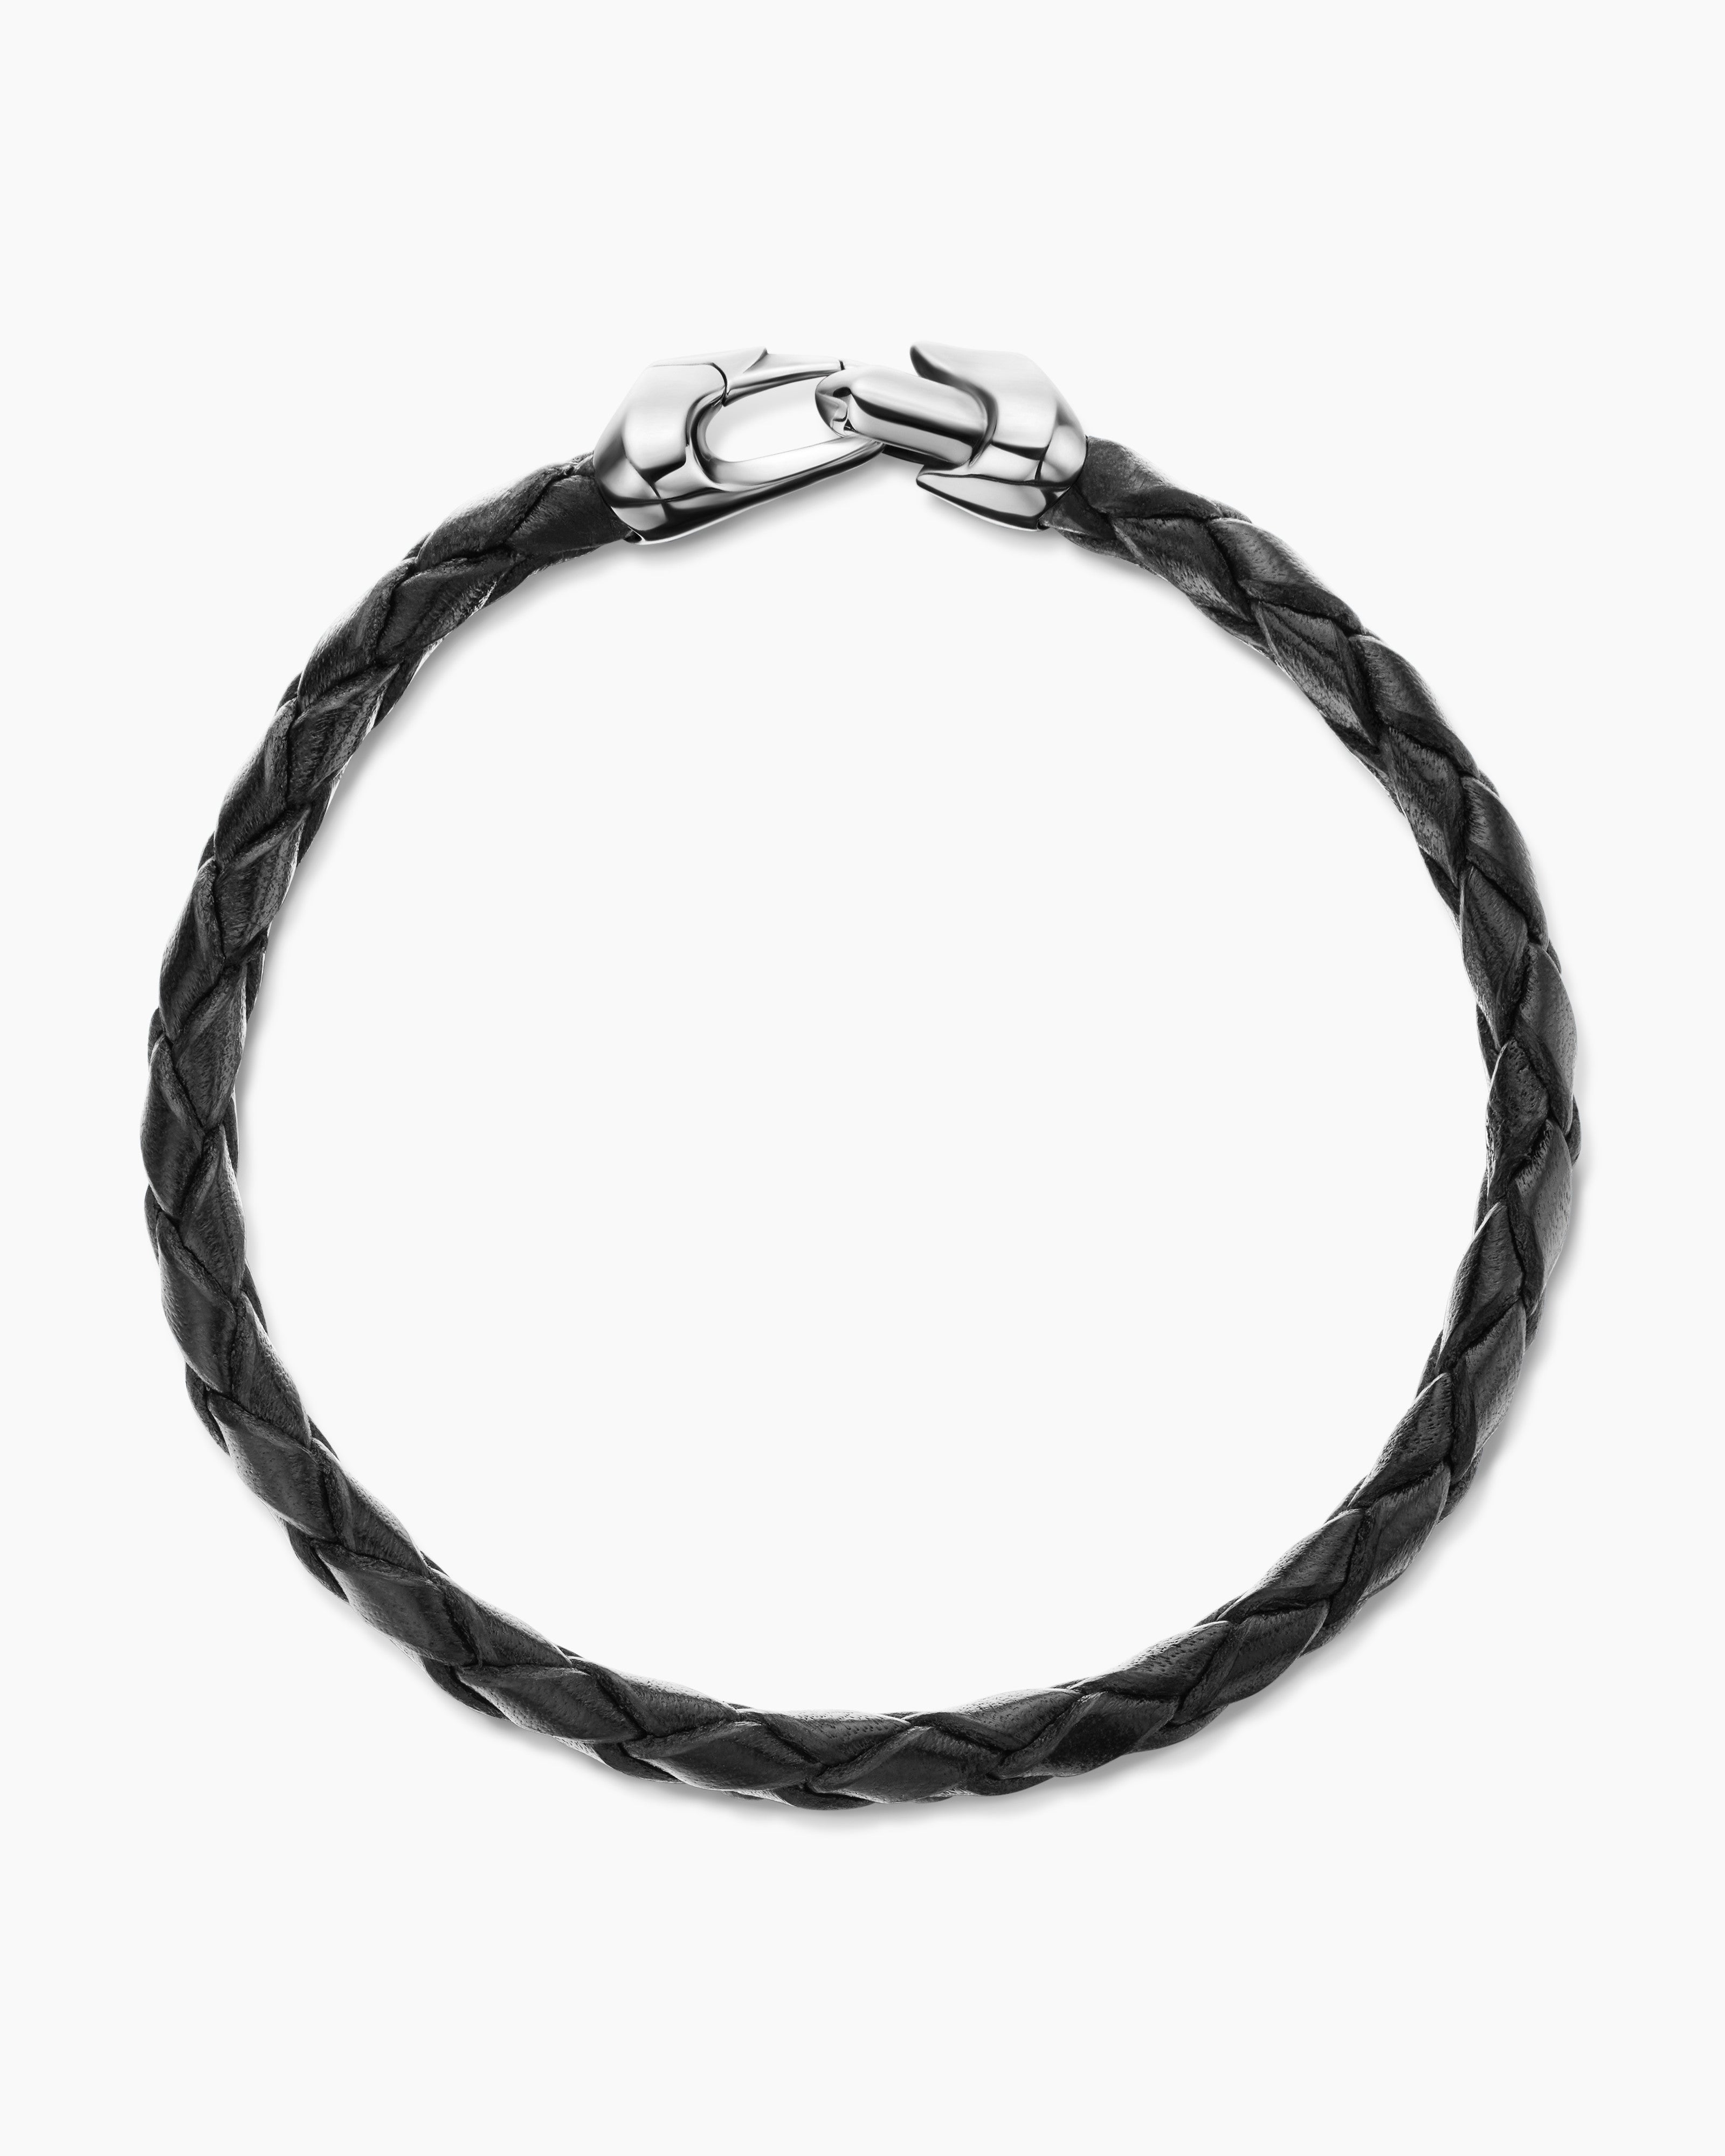 The Black Leather Bracelet